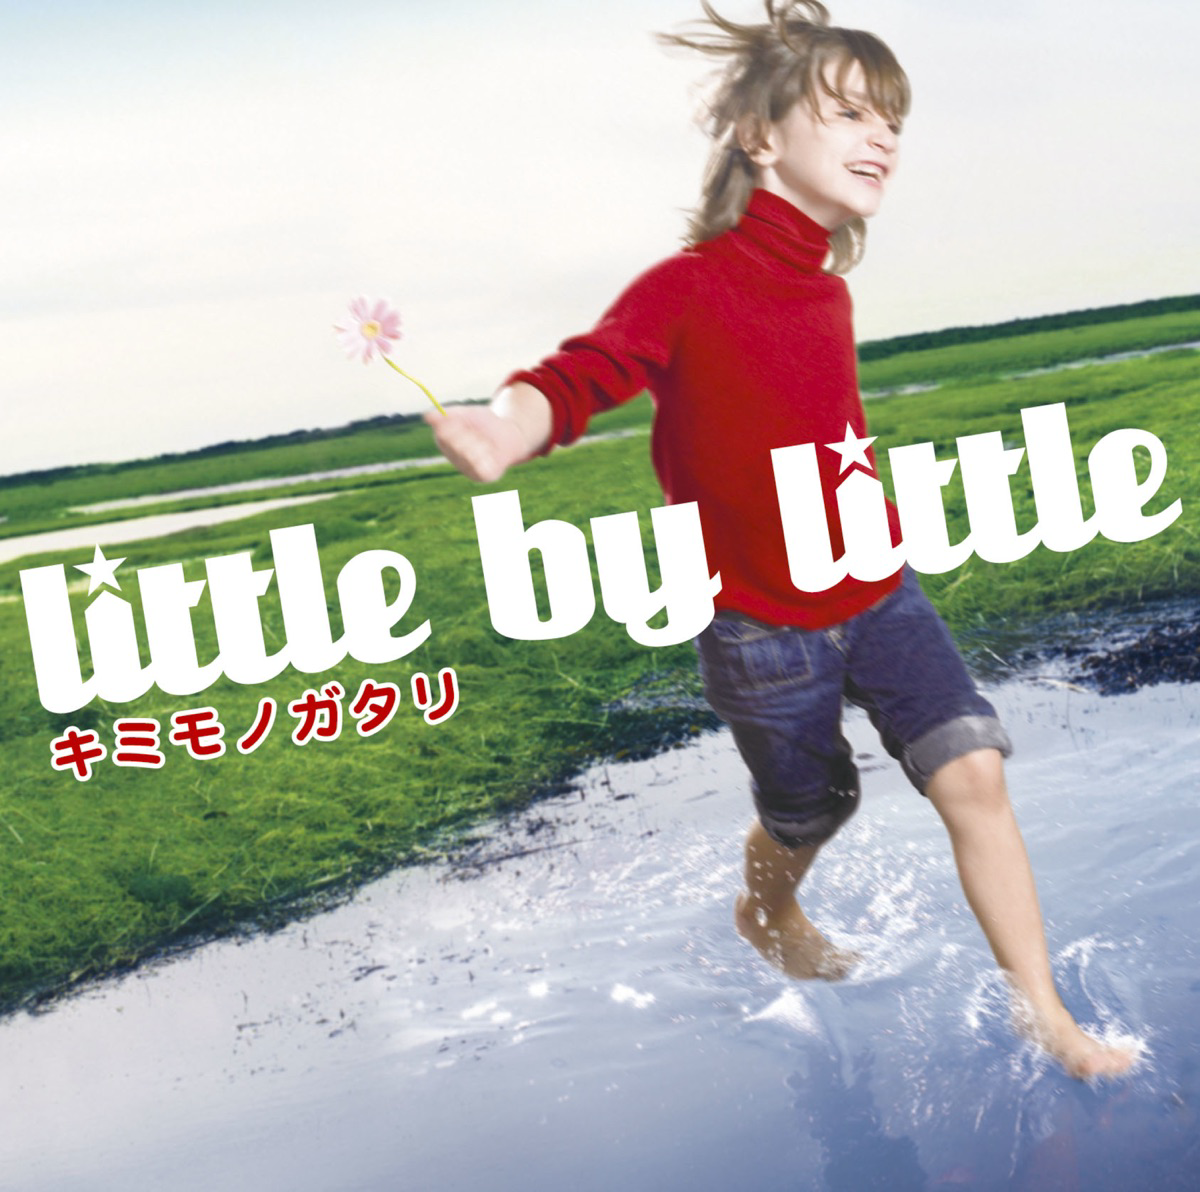 Little by Little - EDEN Cover